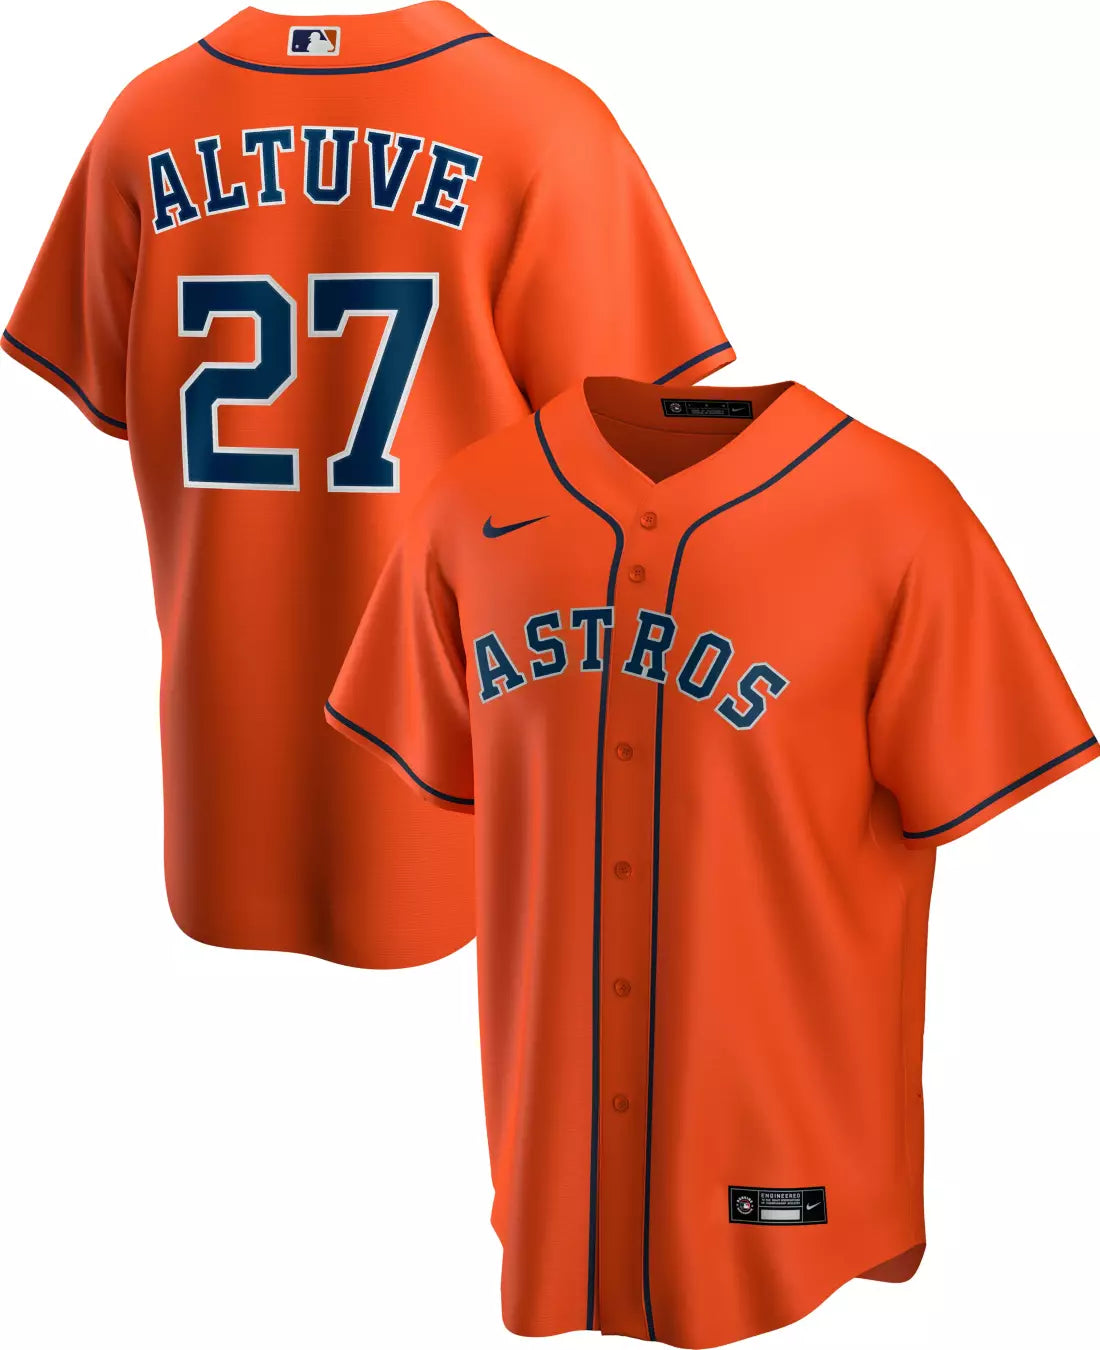 Jose Altuve Houston Astros Jersey XL